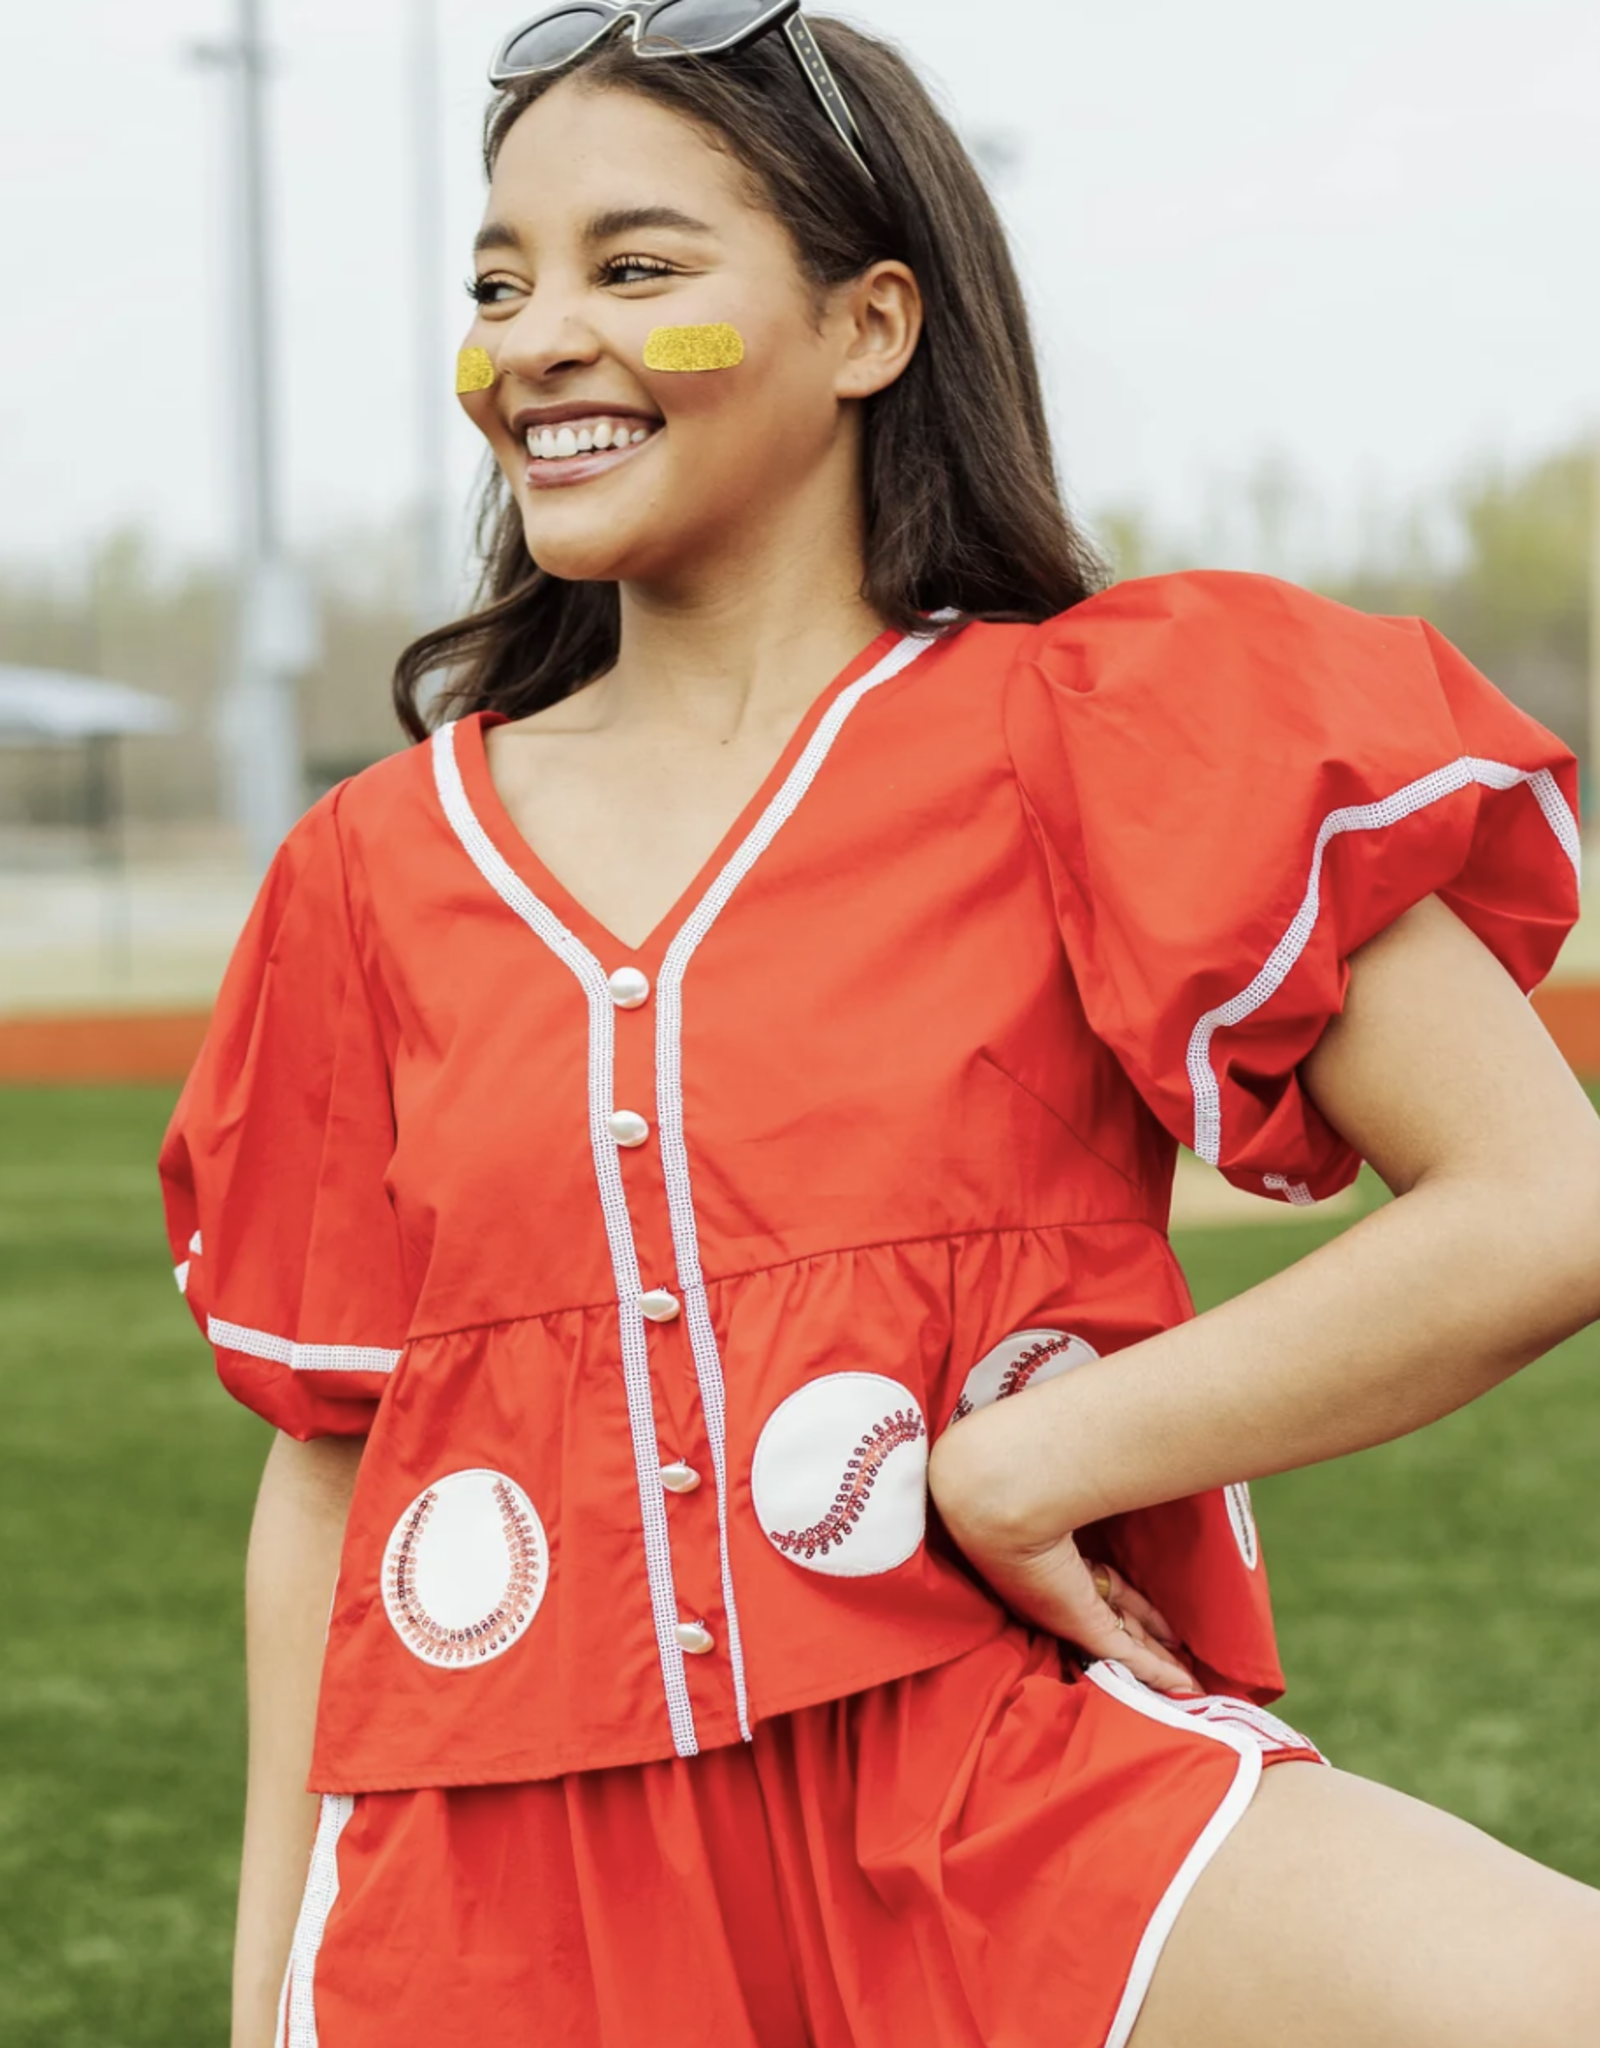 Queen of Sparkles Queen of Sparkles Peplum Baseball Top